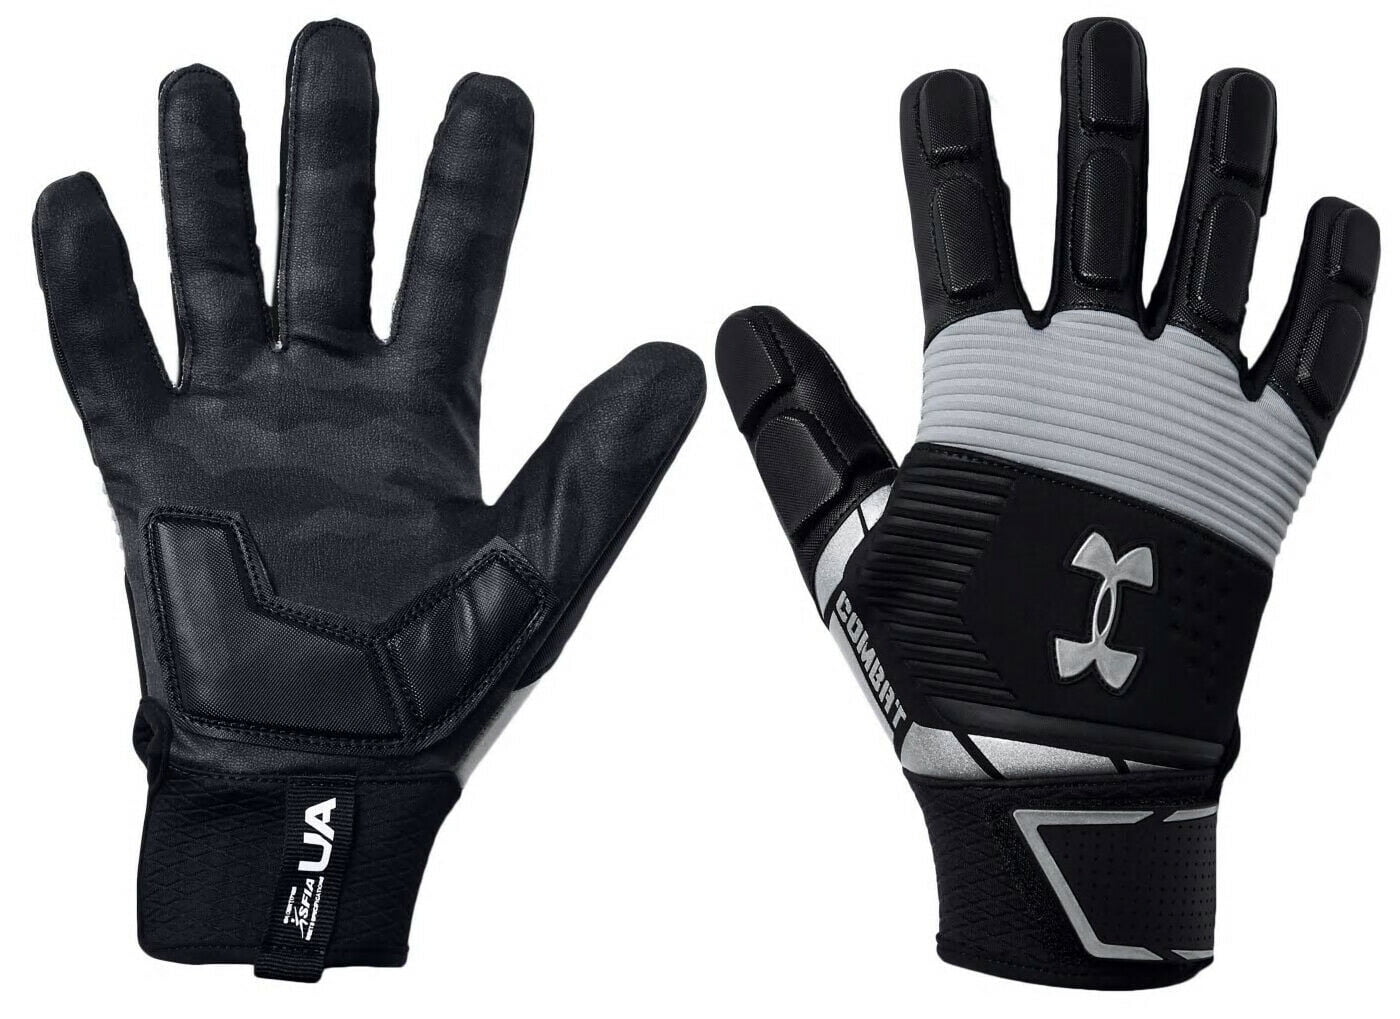 Under Armour Men's UA Combat Football Lineman Gloves 1326221-001 Black 